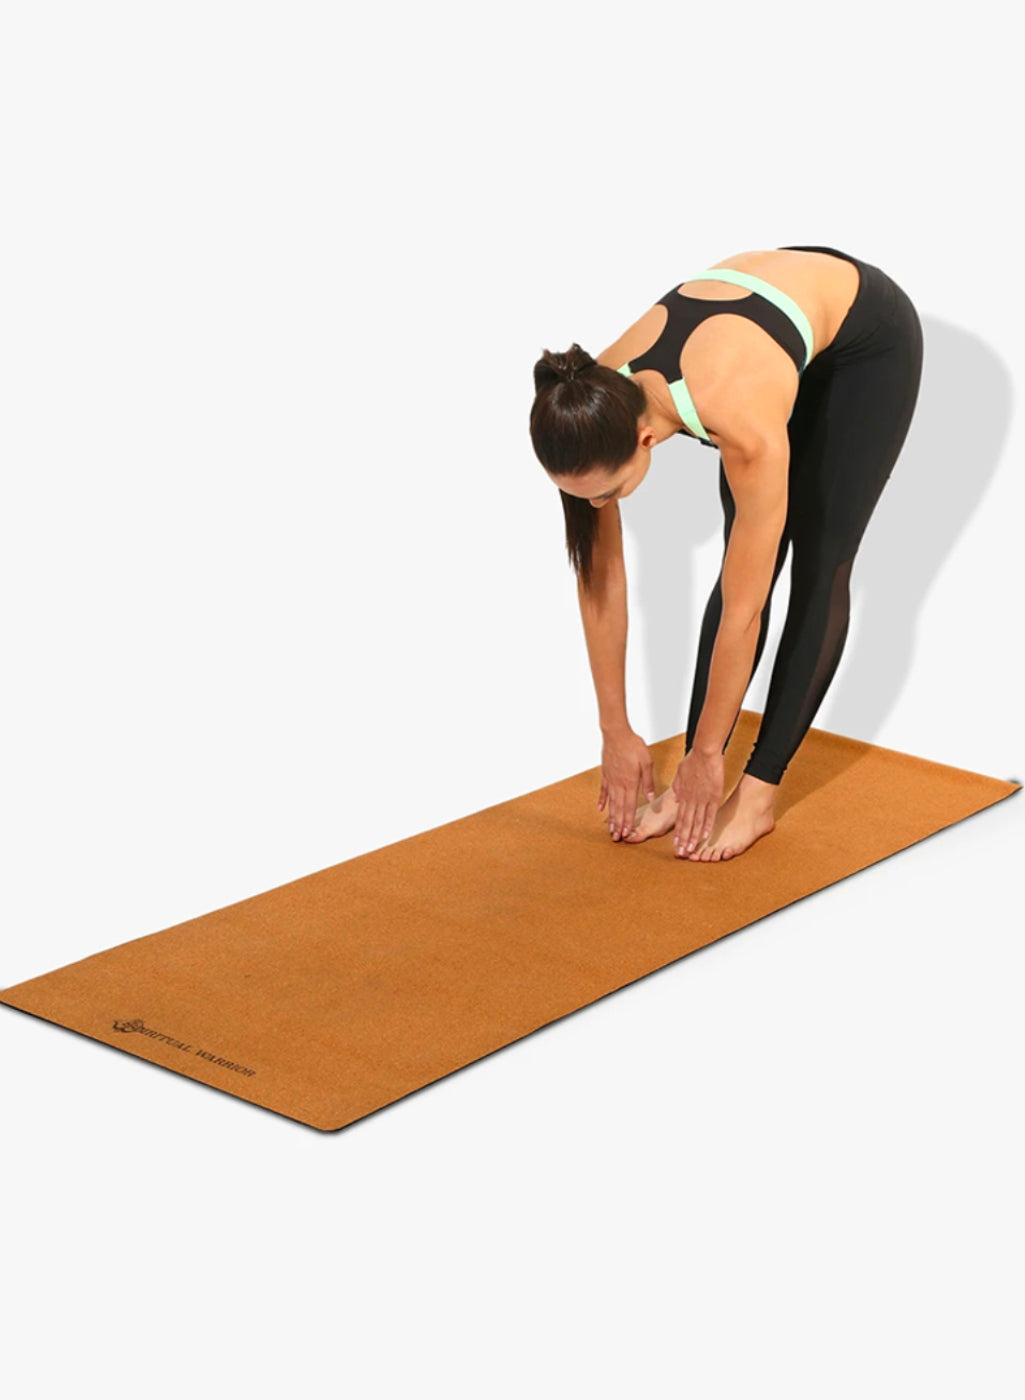 Yoga-Mad Warrior II Yoga Mat, 183cm x 61cm x 4mm, Non Slip Lightweight  Exercise Mat